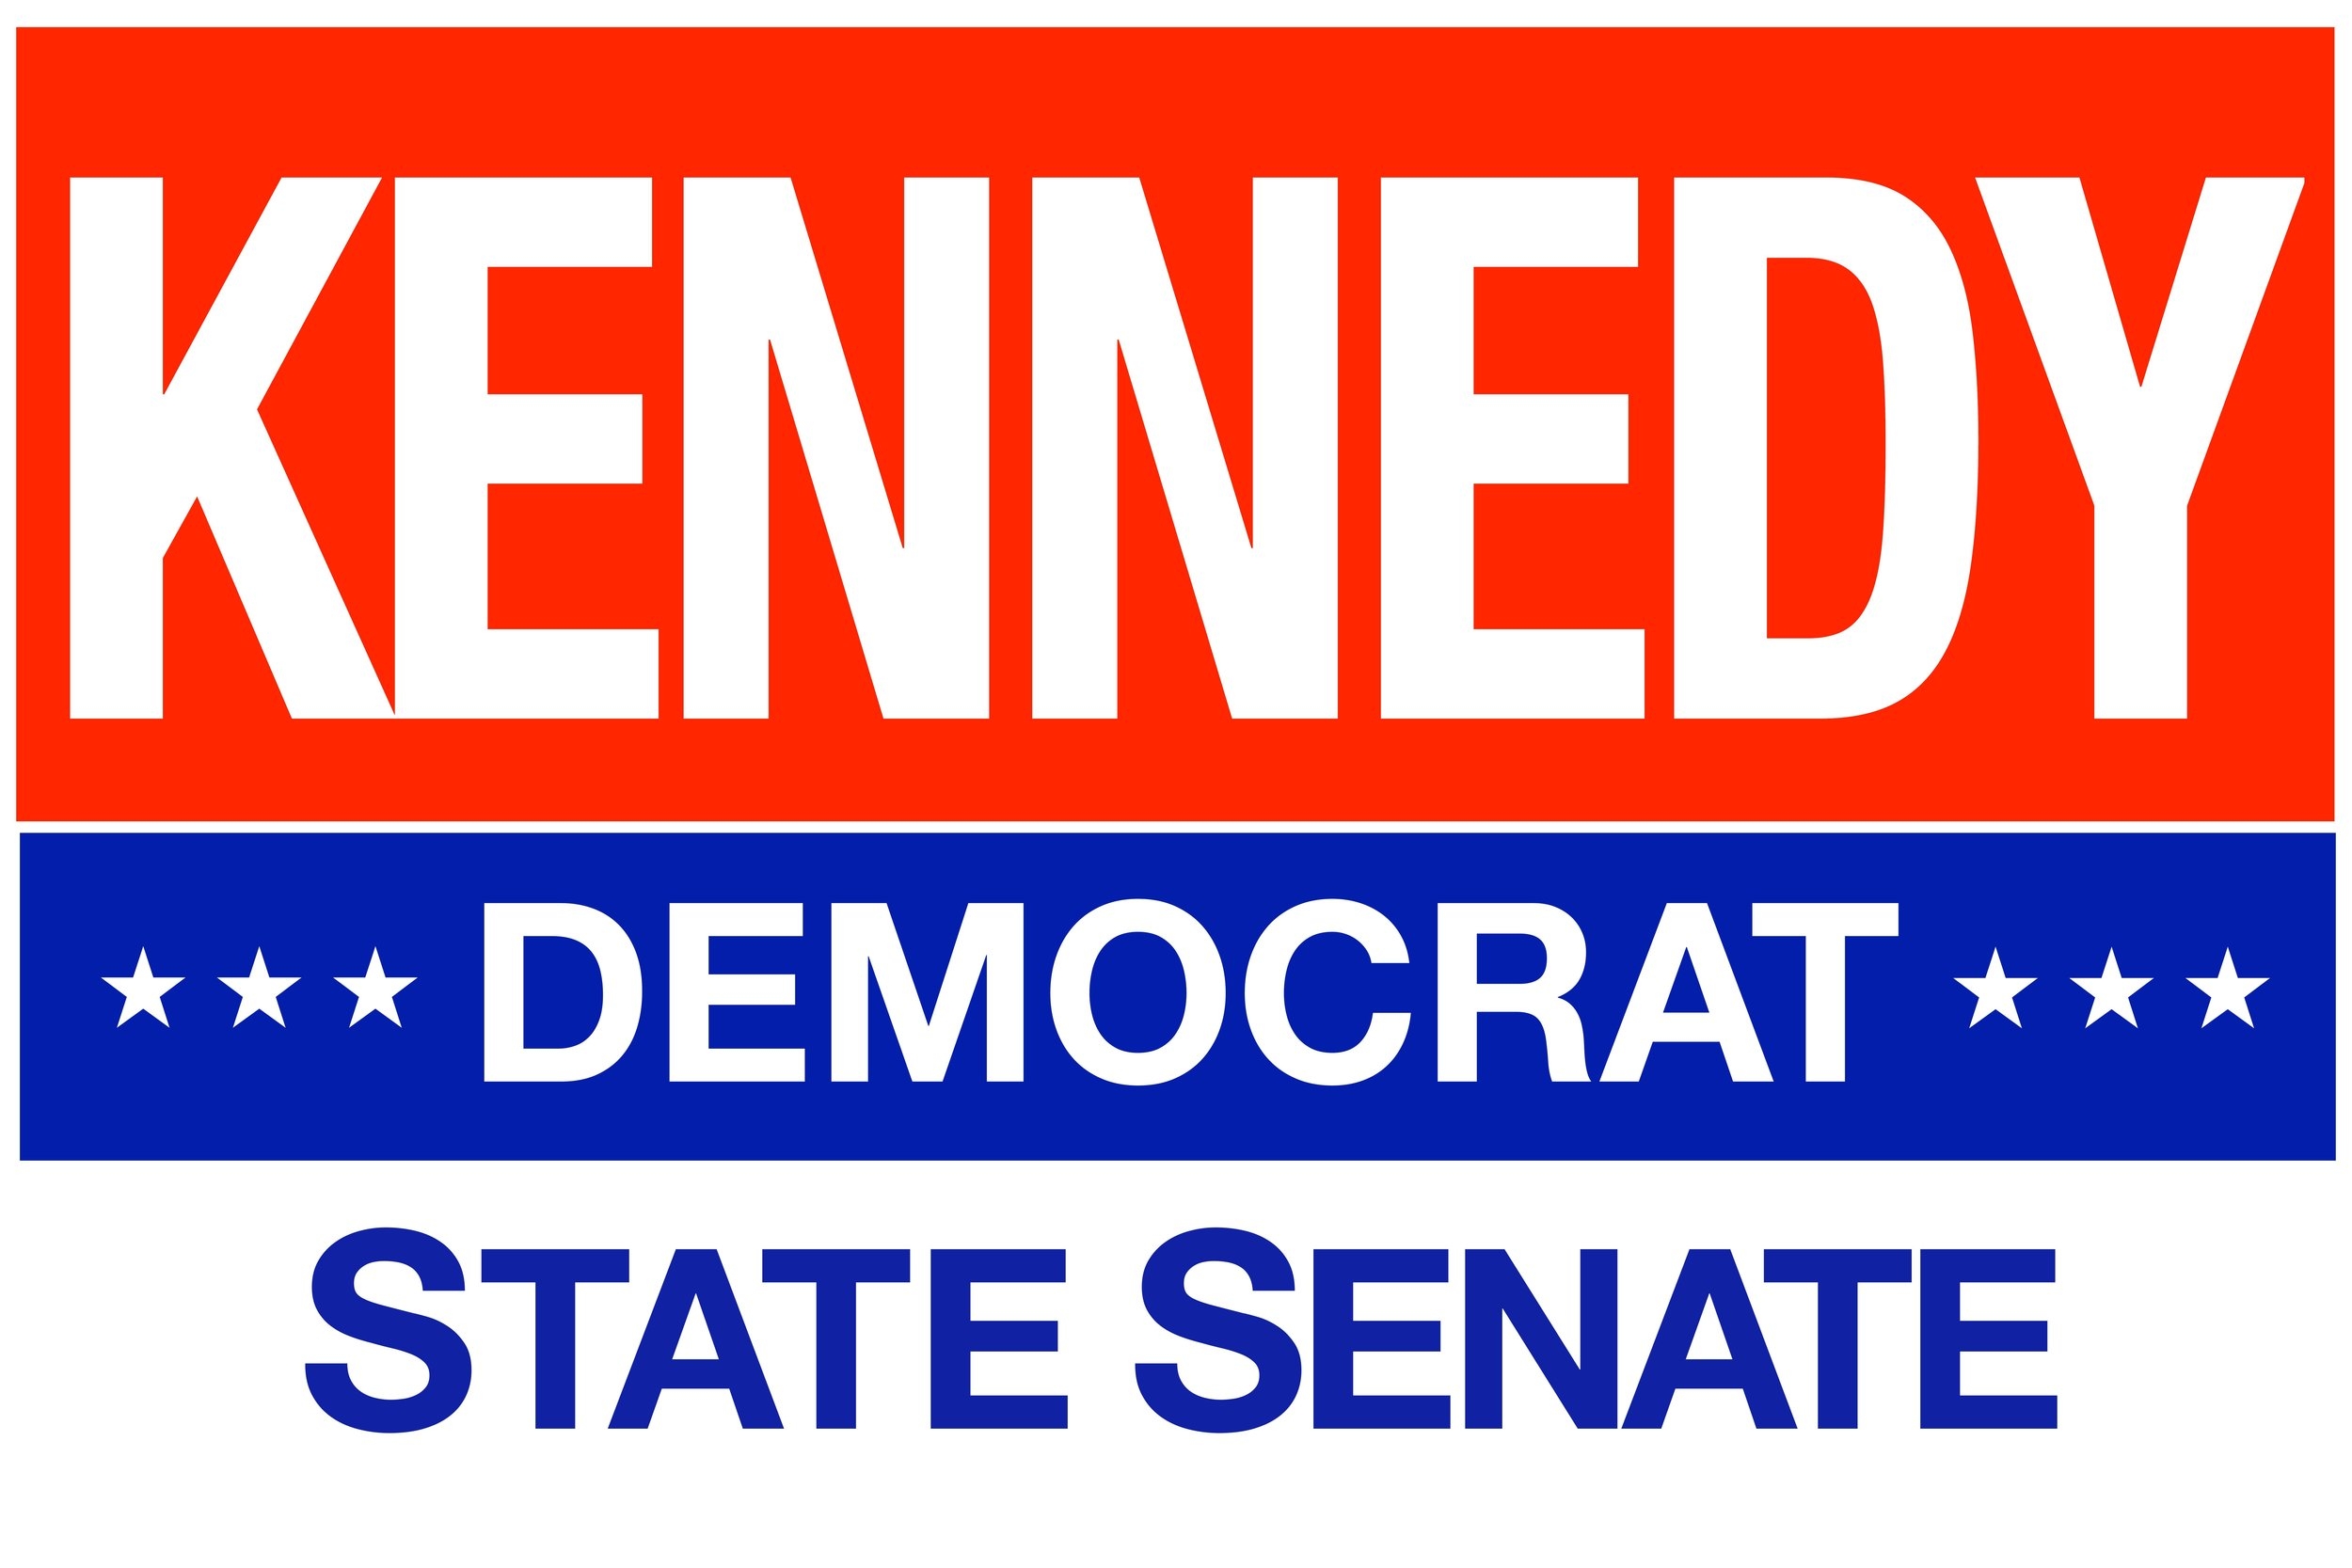 Tim Kennedy for Senate